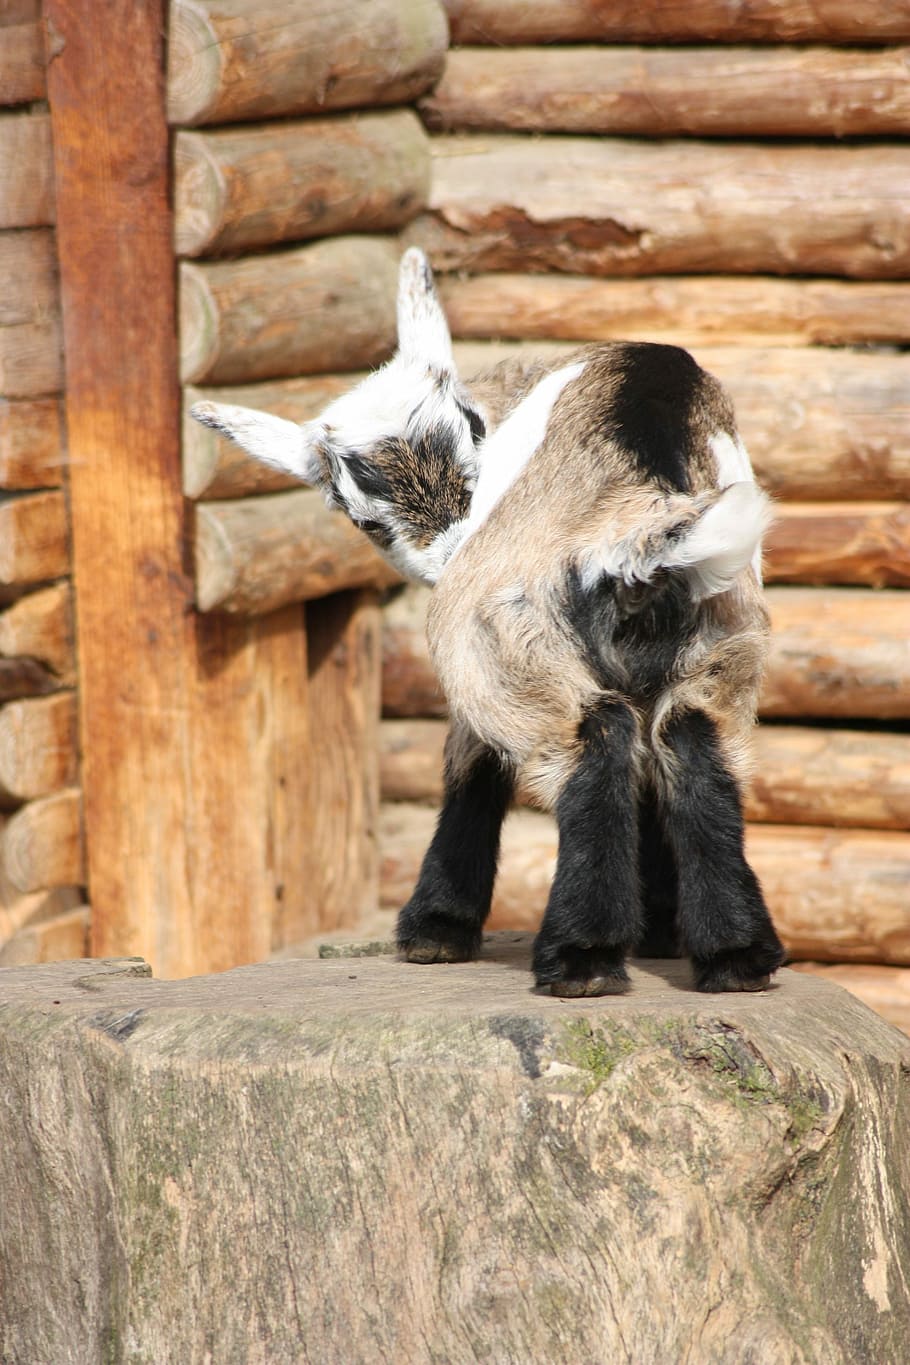 Baby, Goat, Animal, Small, baby goat, one animal, animal themes, wood - material, animal wildlife, mammal